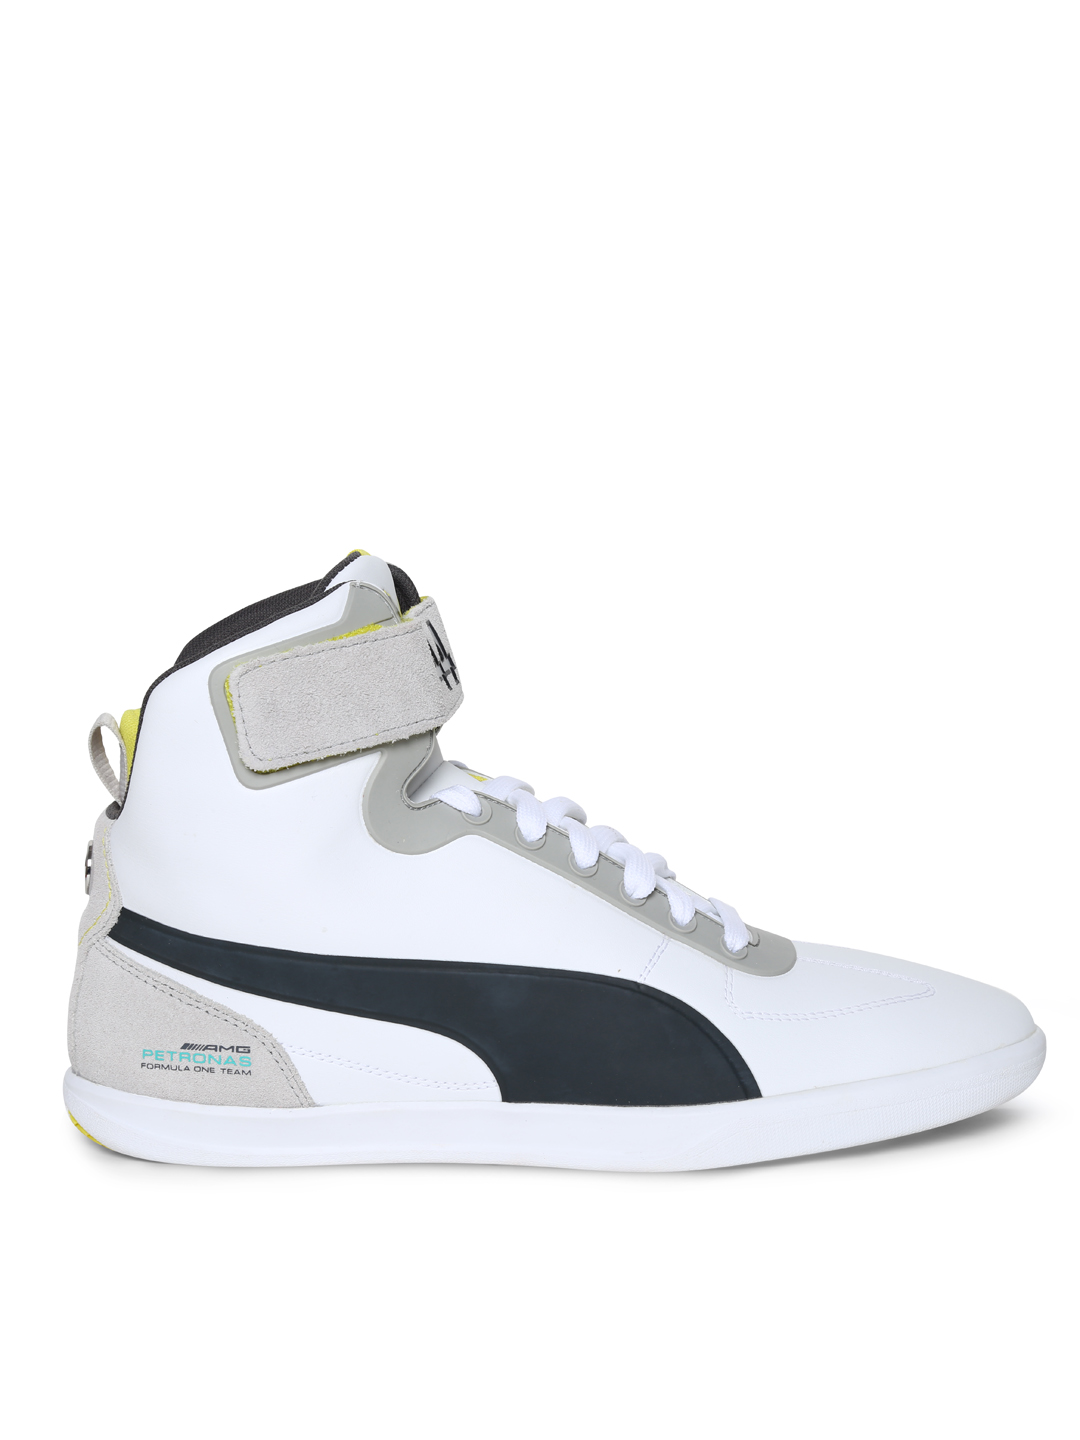 Puma Men White Casual Shoes (30568901)